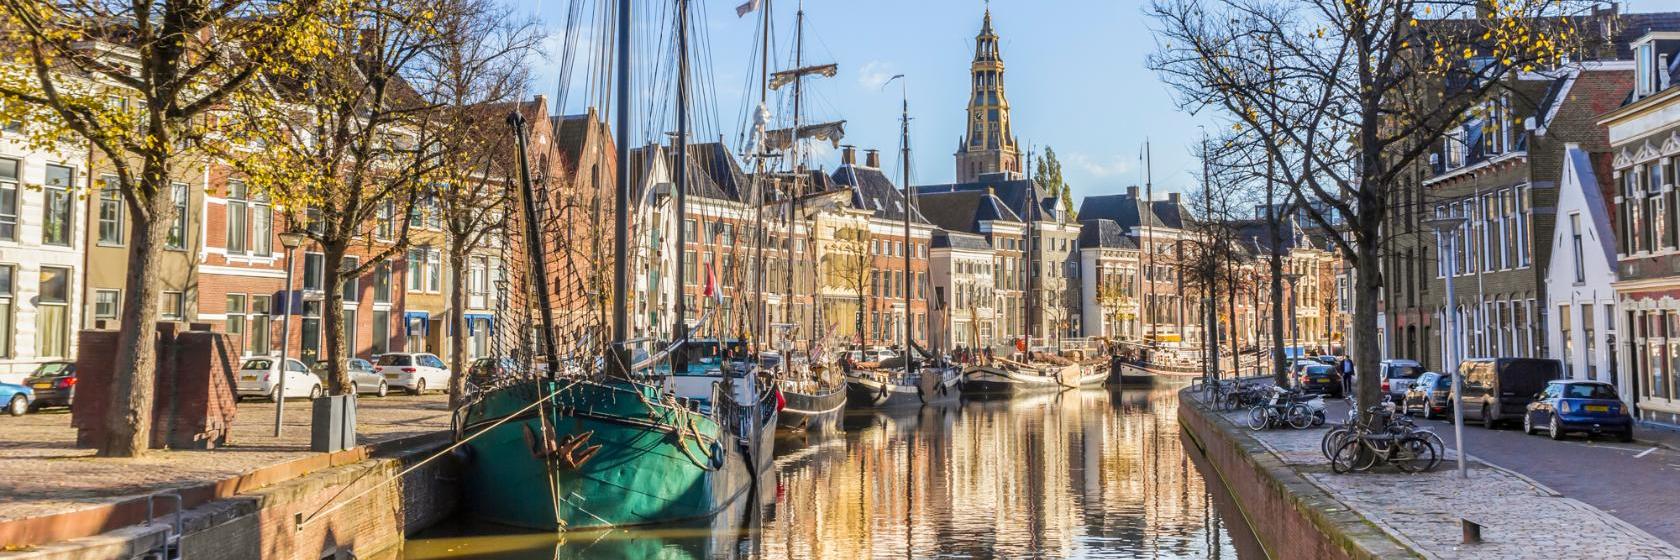 10 Best Groningen Hotels, Netherlands (From $59)